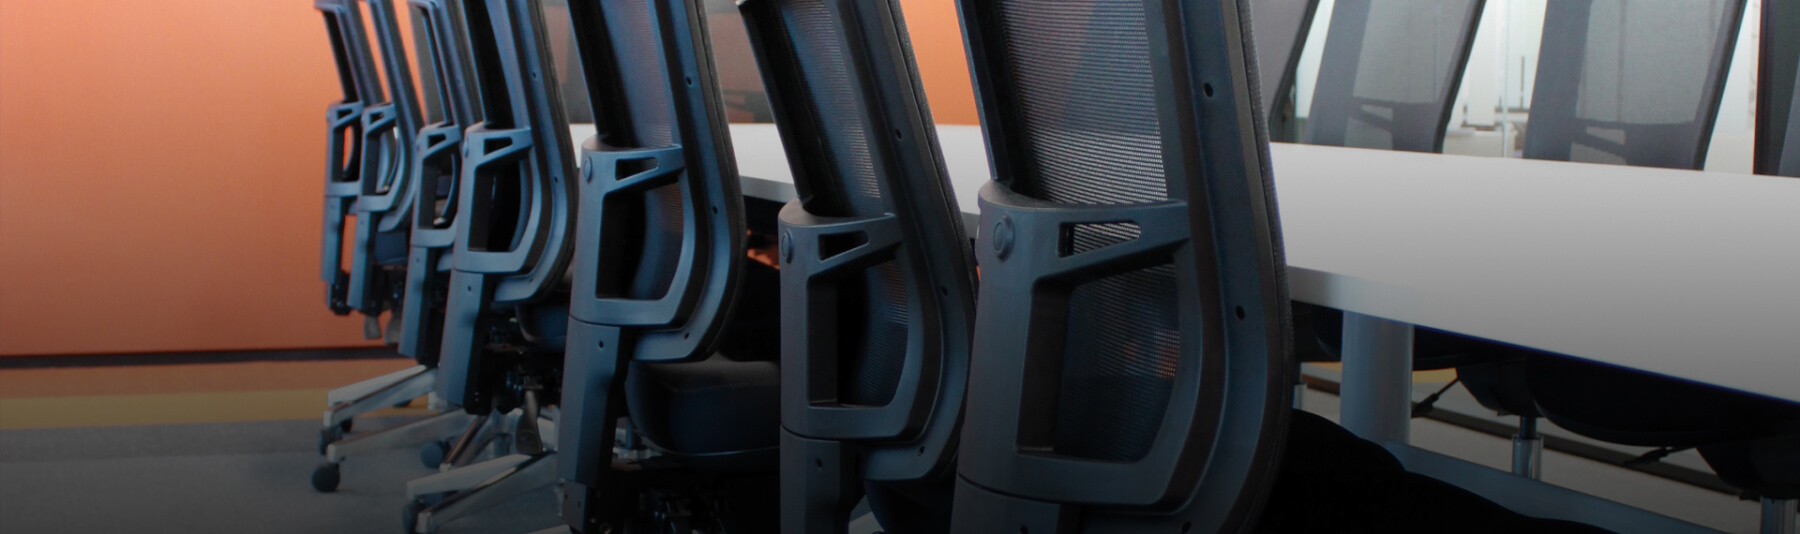 environment-canterbury-metro-II-chairs